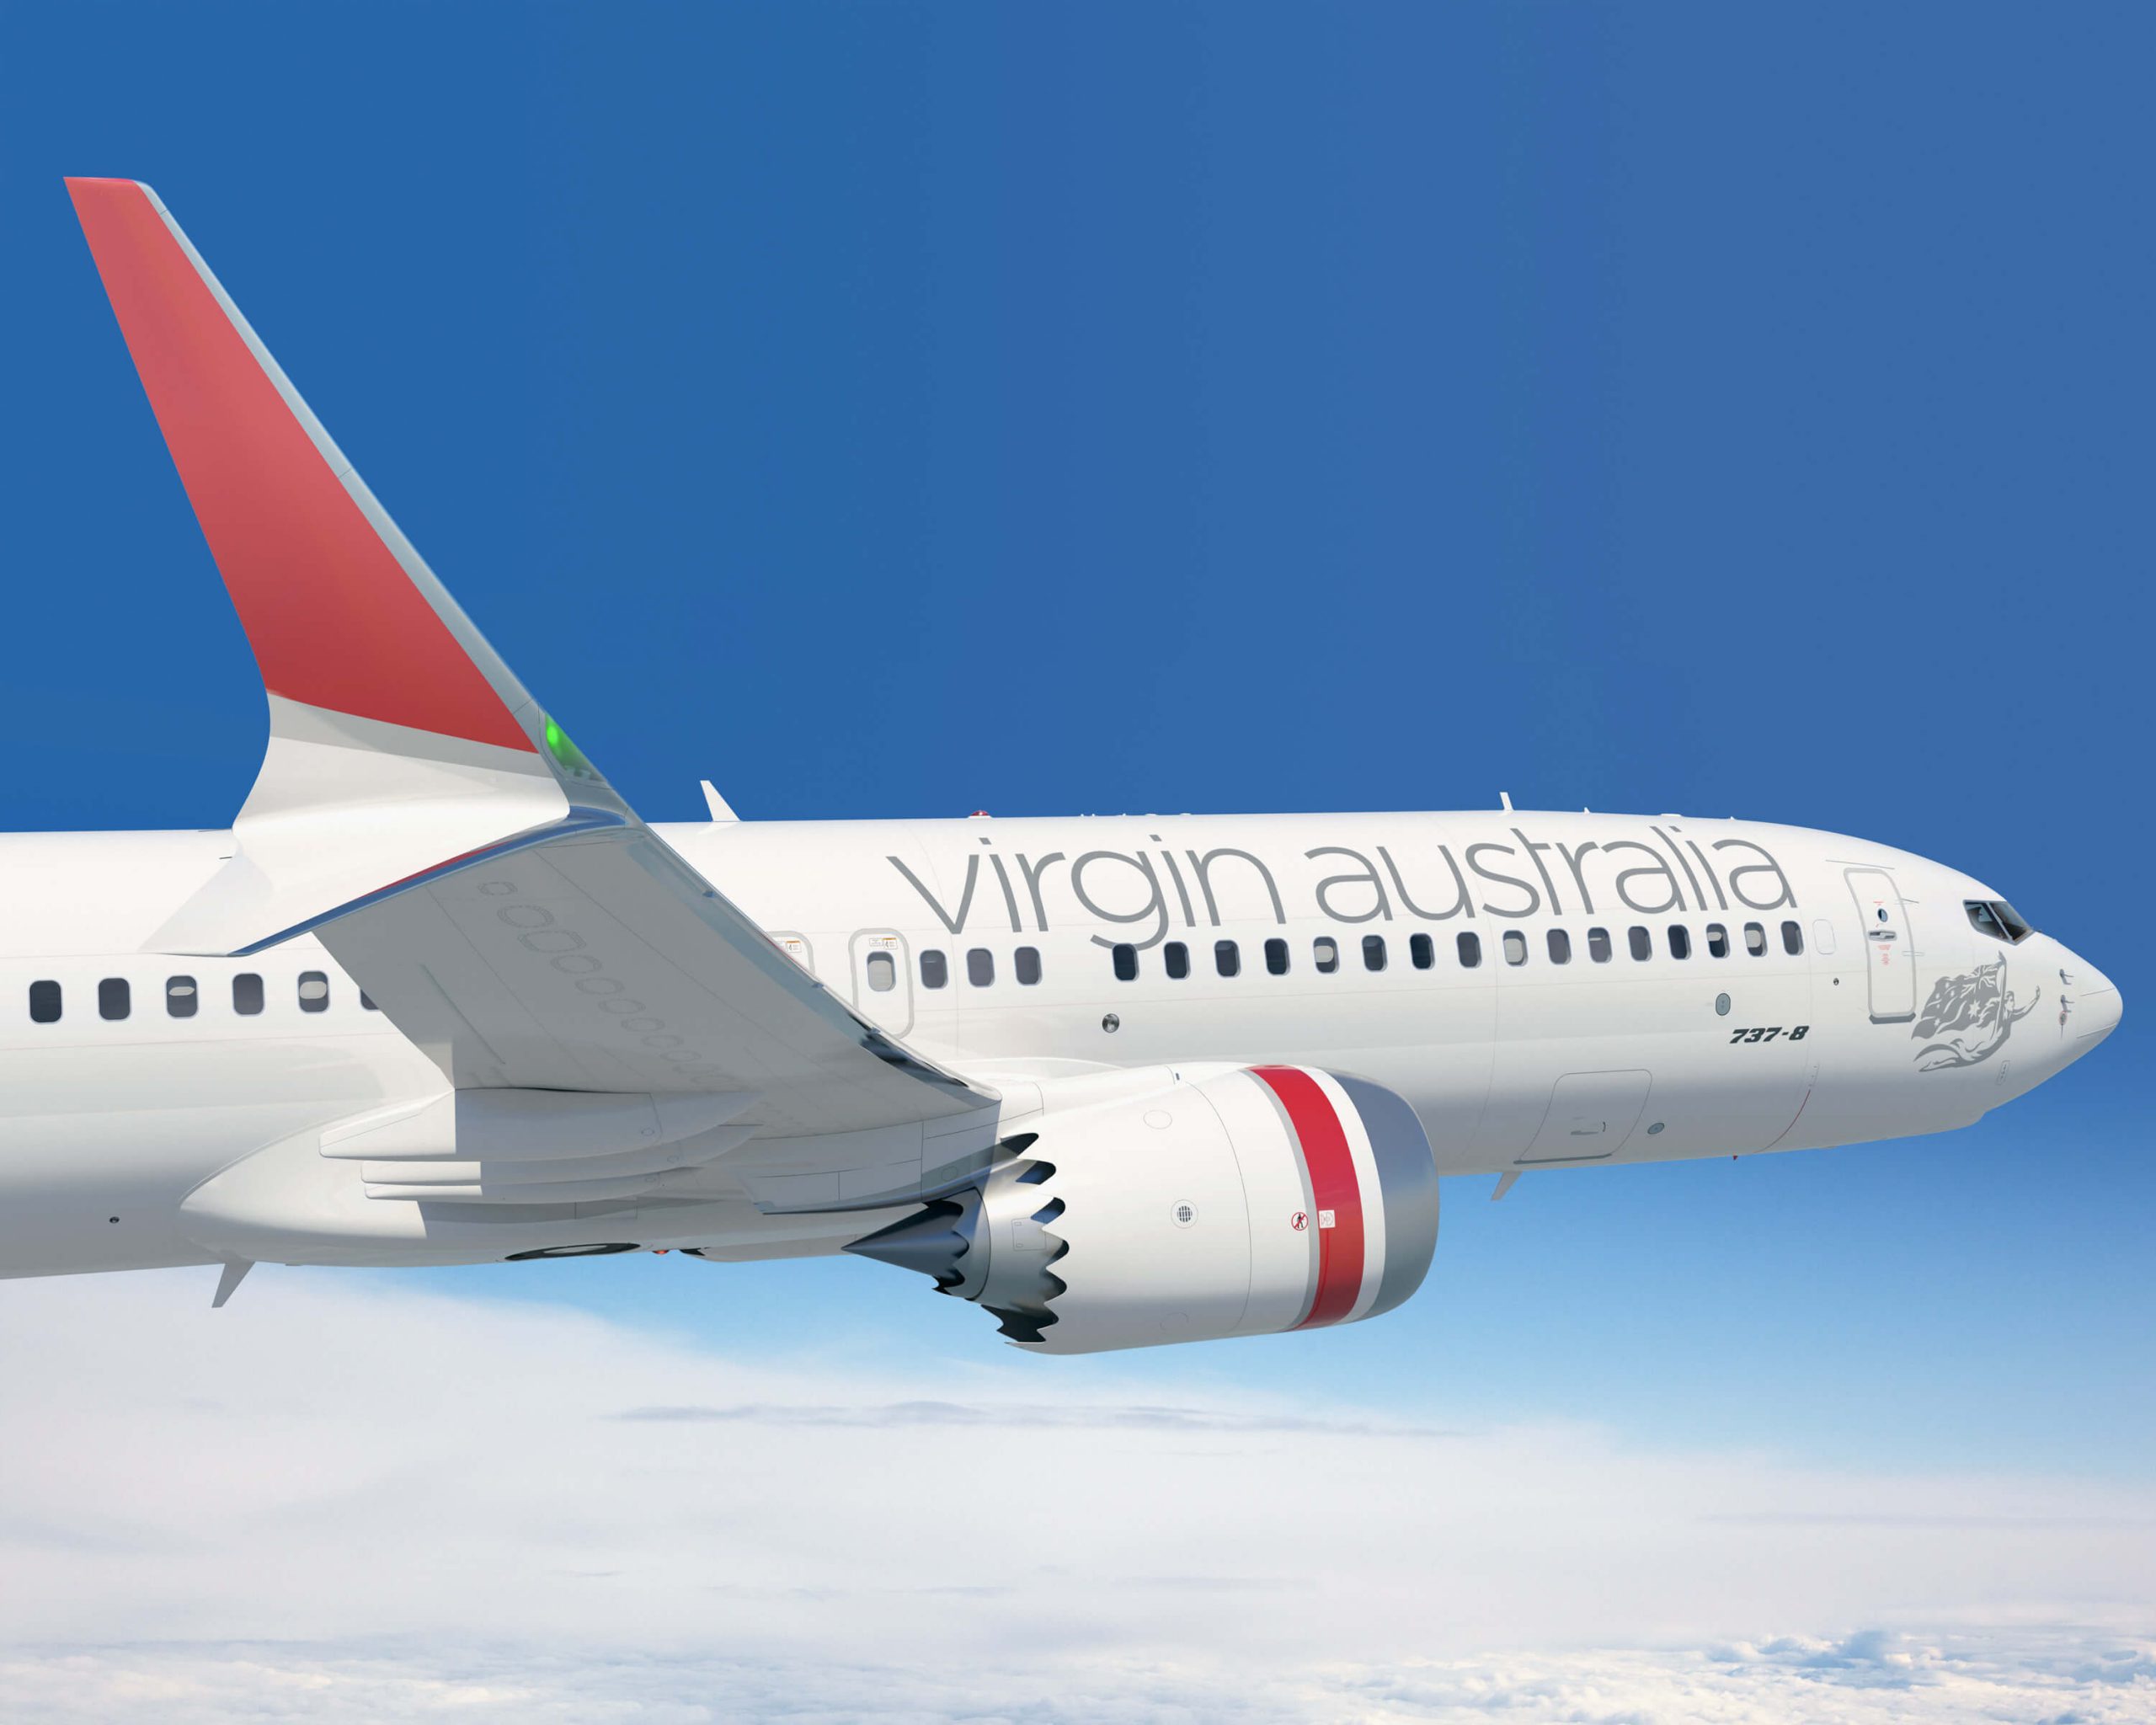 Branson accuses Qantas of seeking government help to crush Virgin Australia